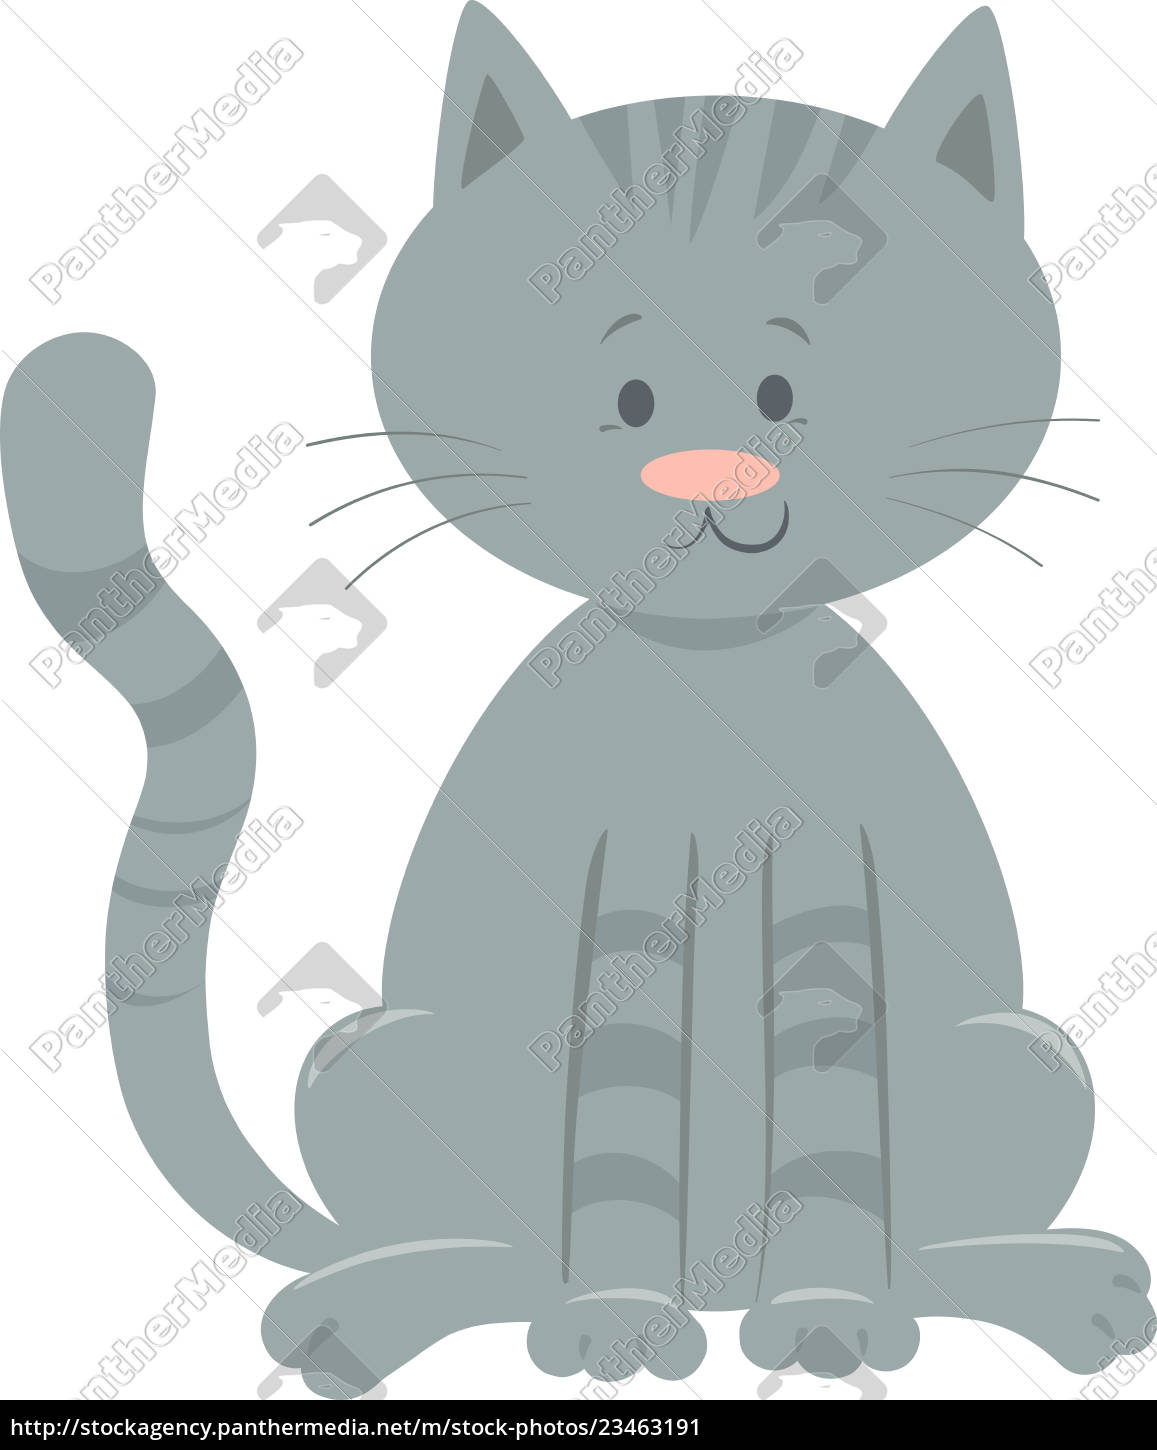 Lizenzfreie Vektorgrafik 23463191 - Süße Hauskatze Cartoon Tier Charakter bestimmt für Süße Cartoon Tiere